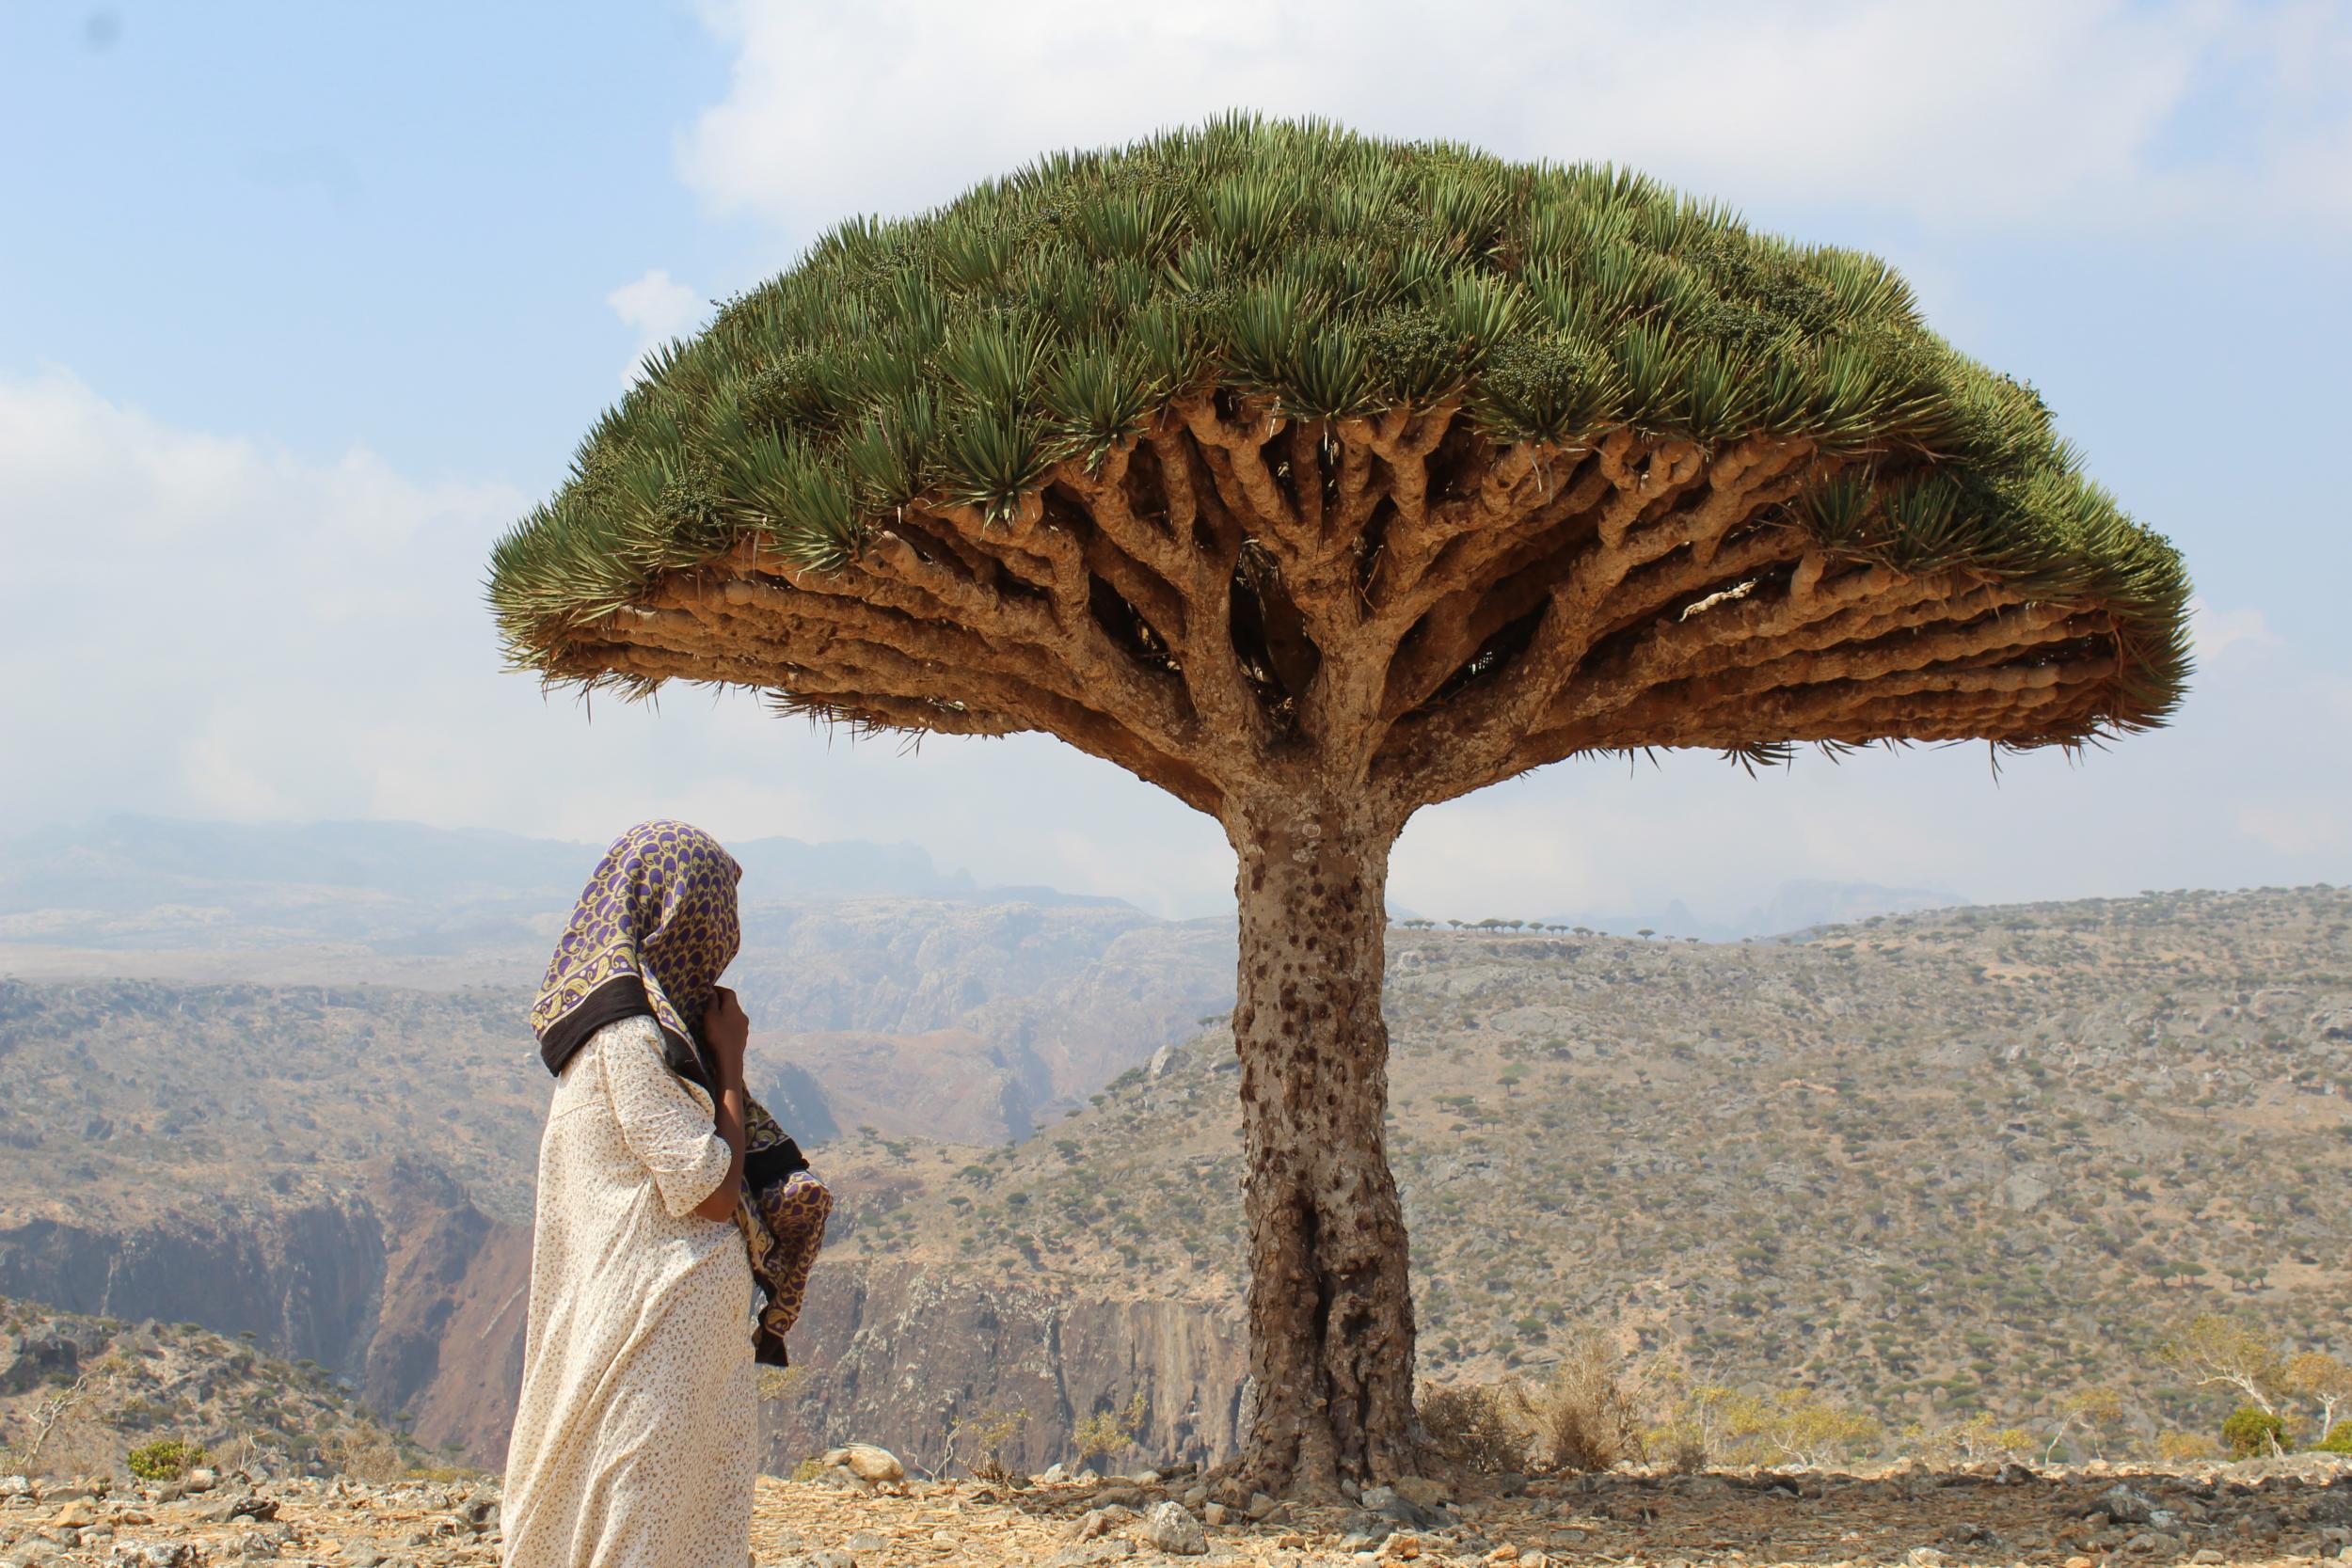 Distant dream: the Yemeni island of Socotra